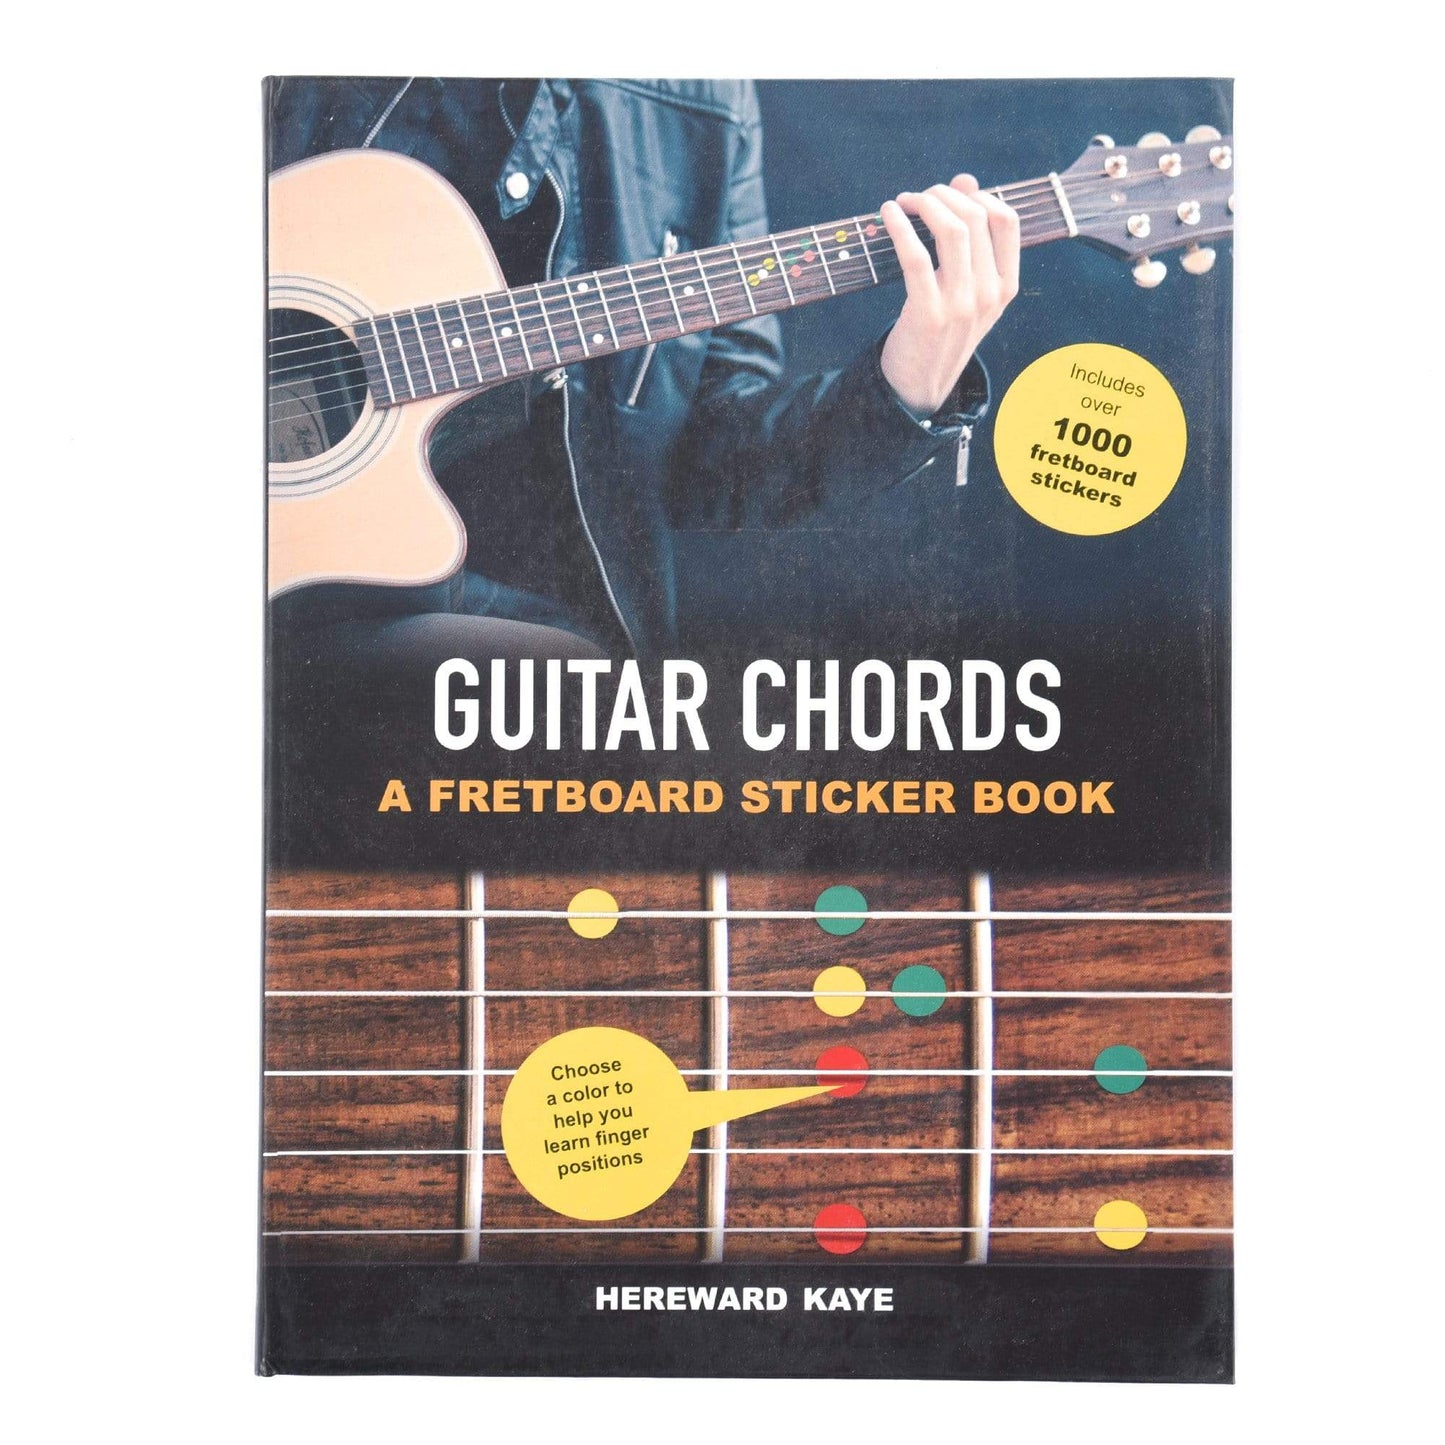 Guitar Chords: A Fretboard Sticker Book Accessories / Books and DVDs